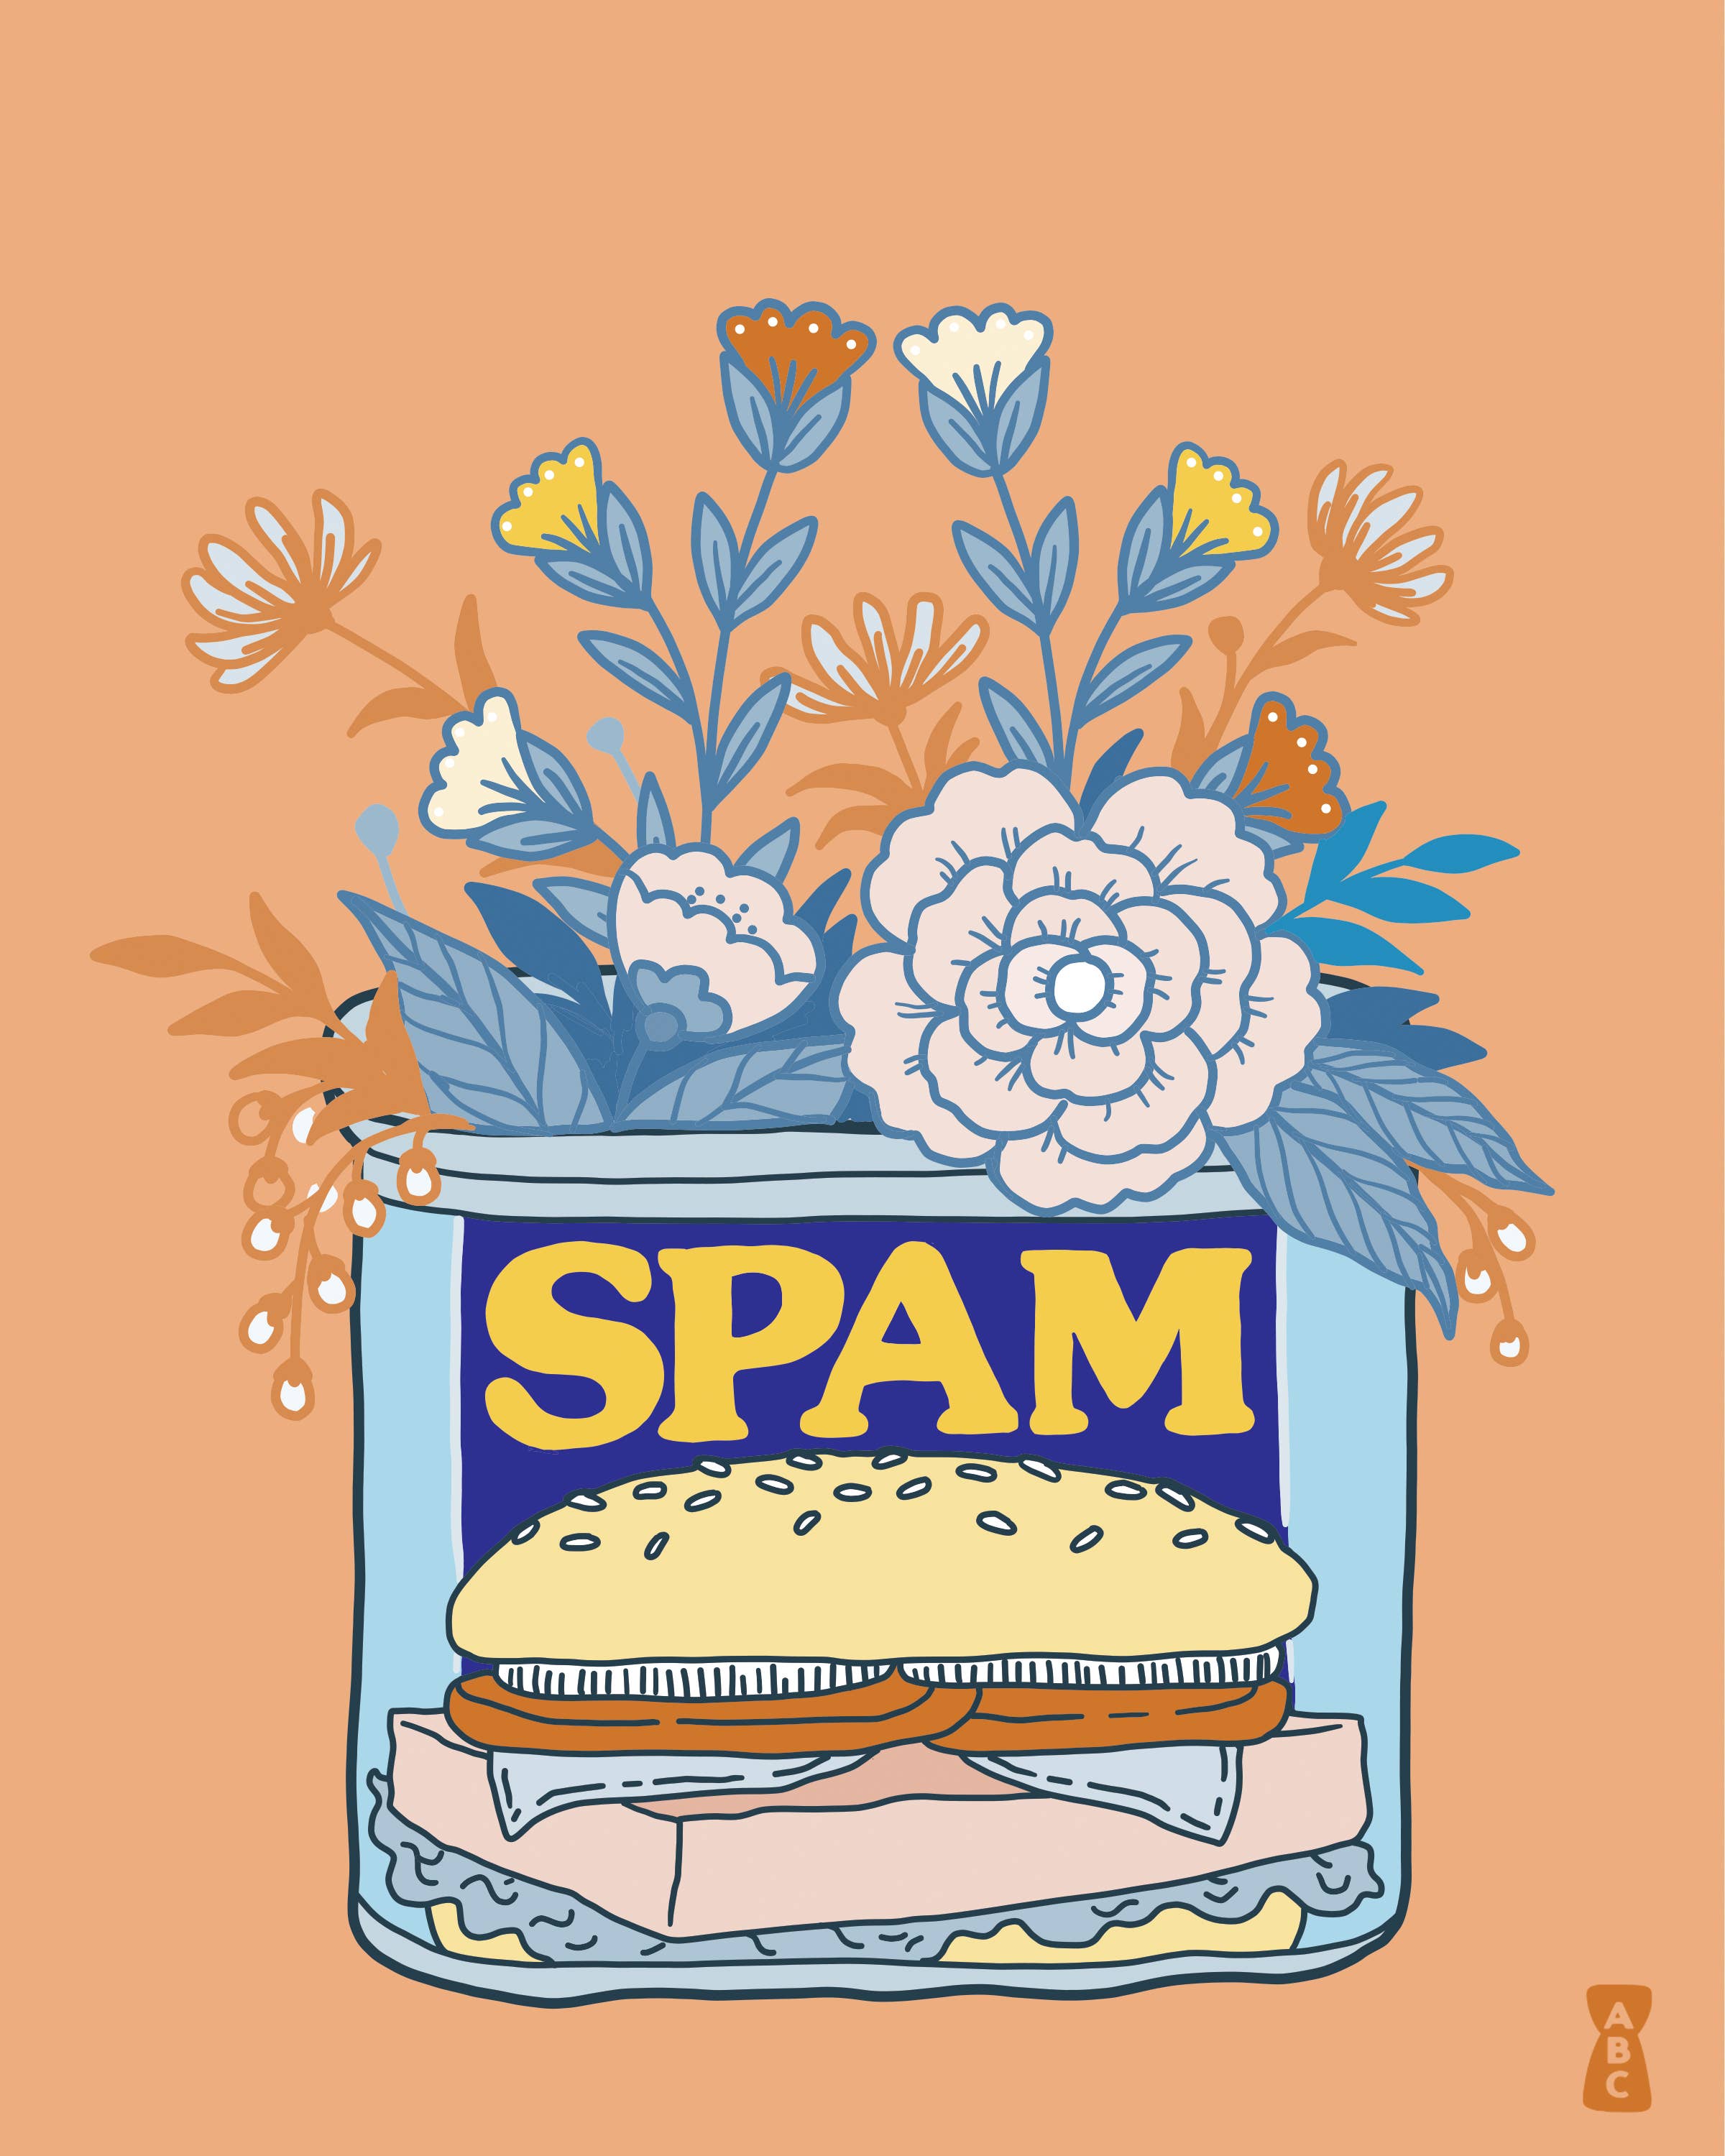 Spam Art Print (8x10)